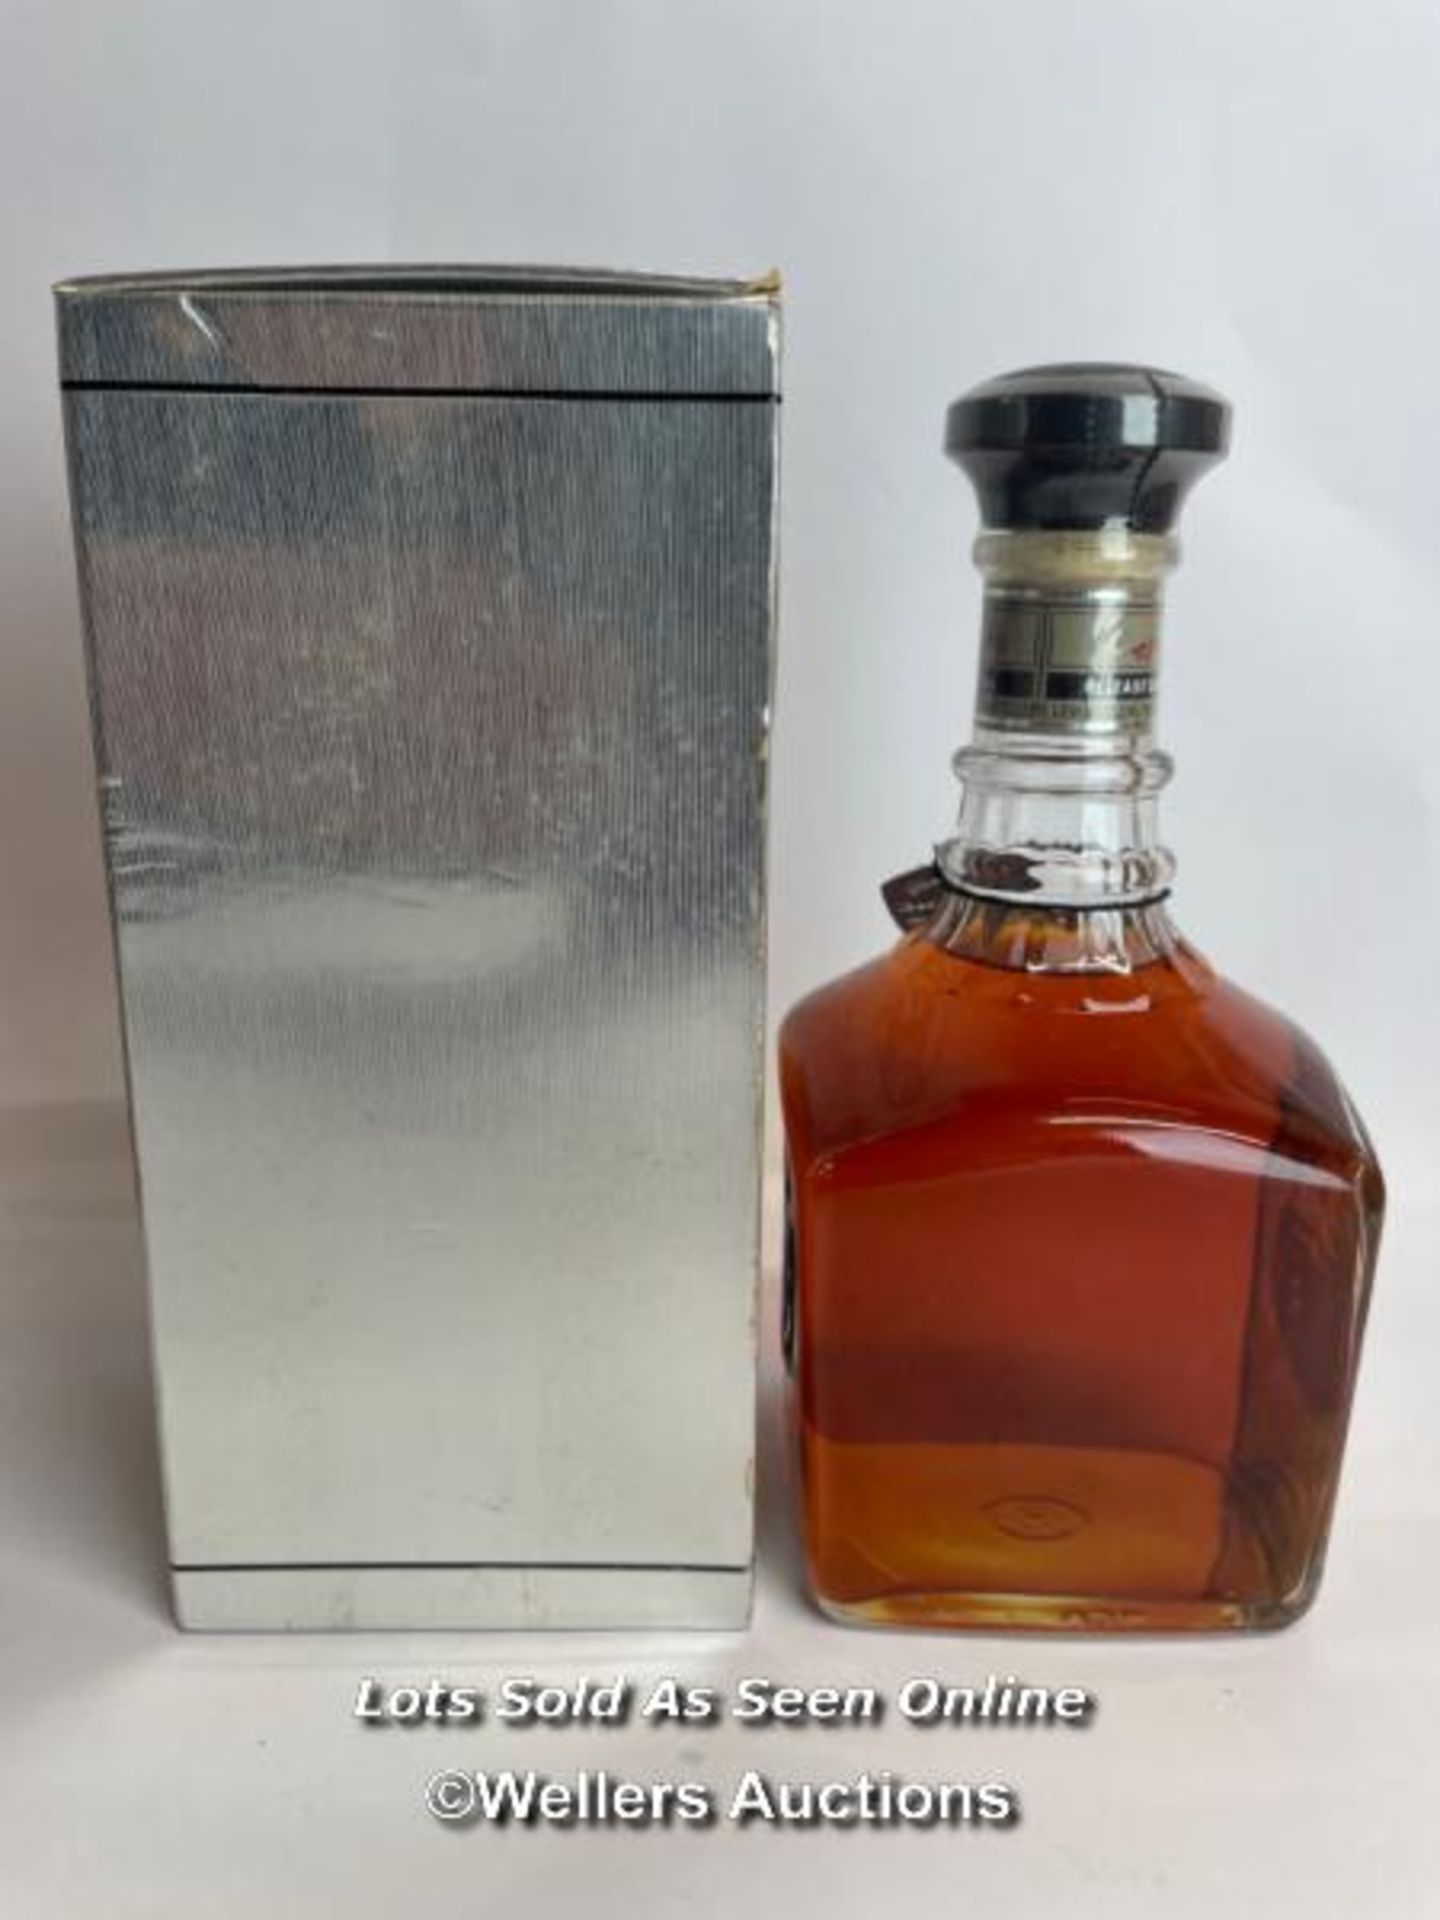 Jack Daniels Silver Select Single Barrel Tennessee Whiskey, Release date: 11-03-99, Barrek no: 9- - Image 2 of 8